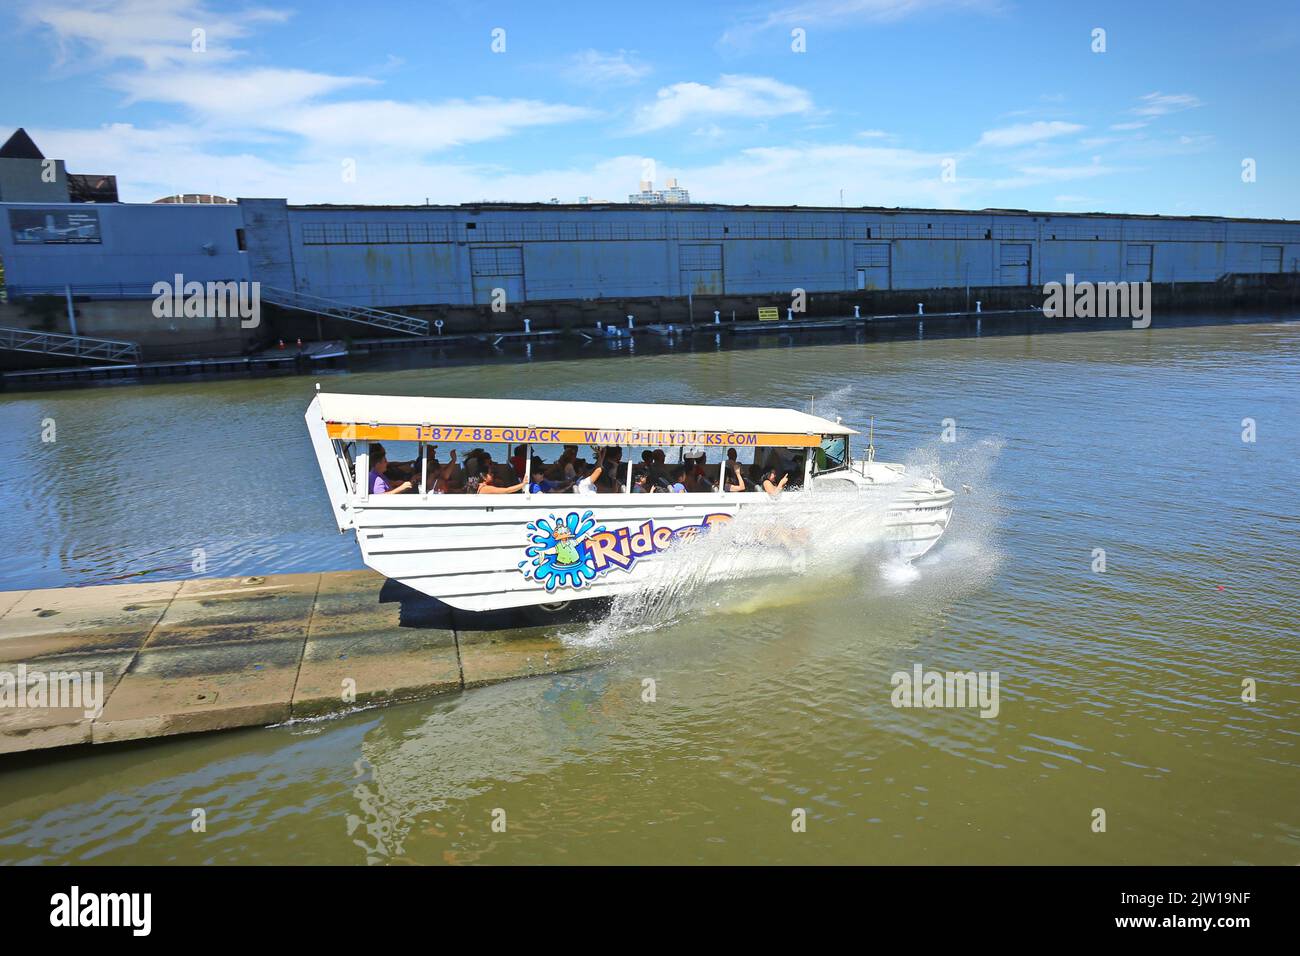 Ride the Duck tourist boat on the river in Philadelphia. Philadelphia, Pennsylvania, USA - August 2019. Stock Photo